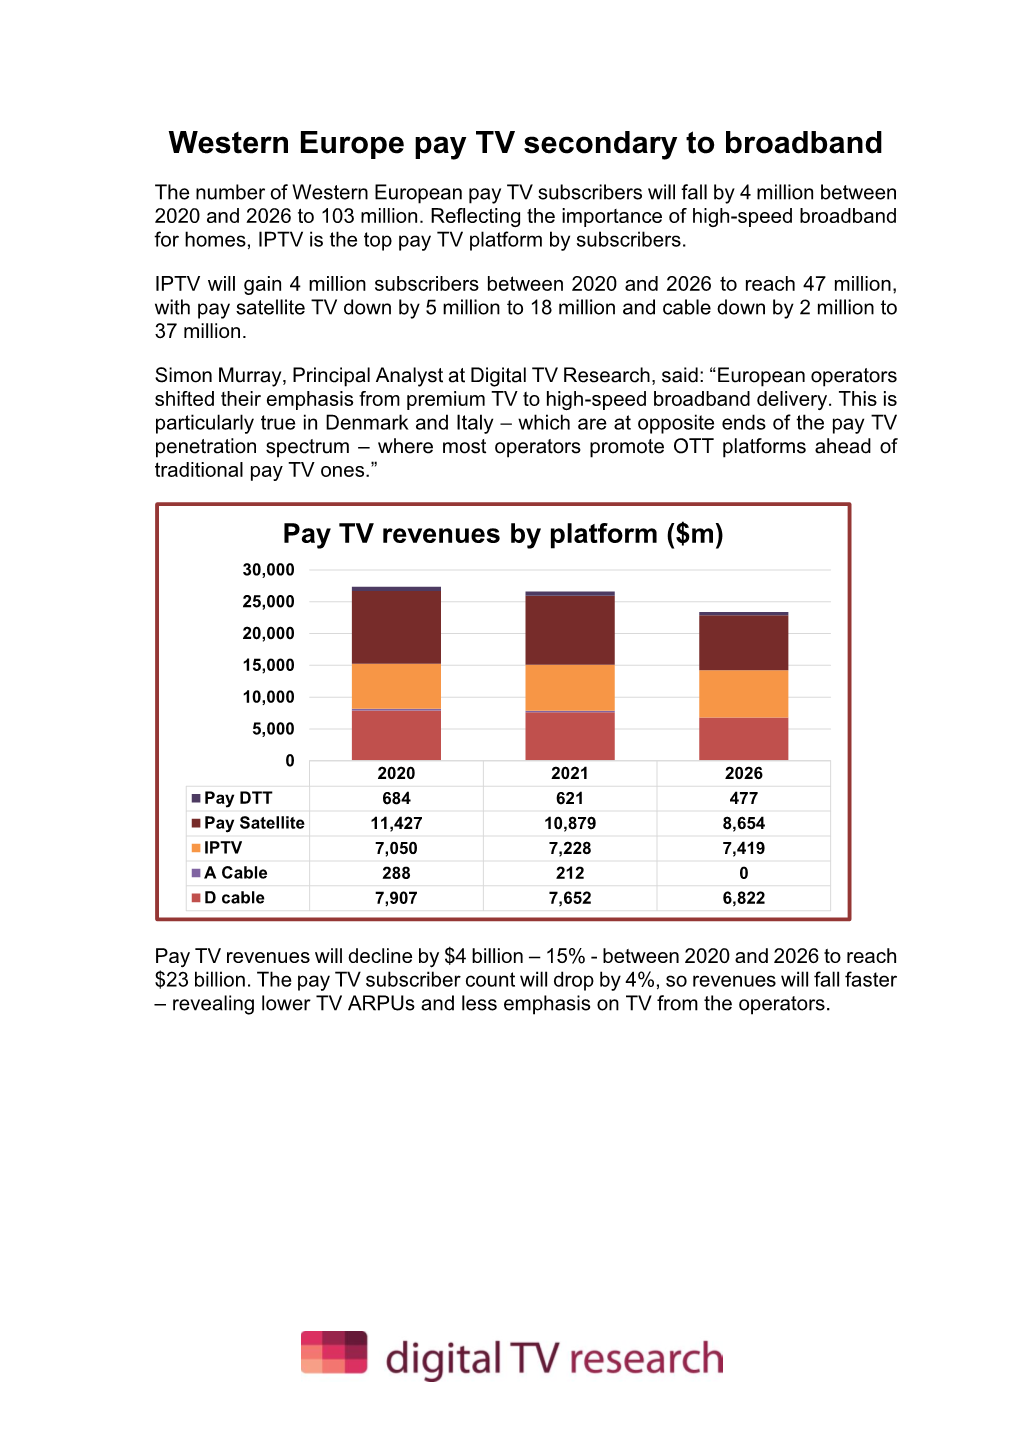 Western Europe Pay TV Secondary to Broadband